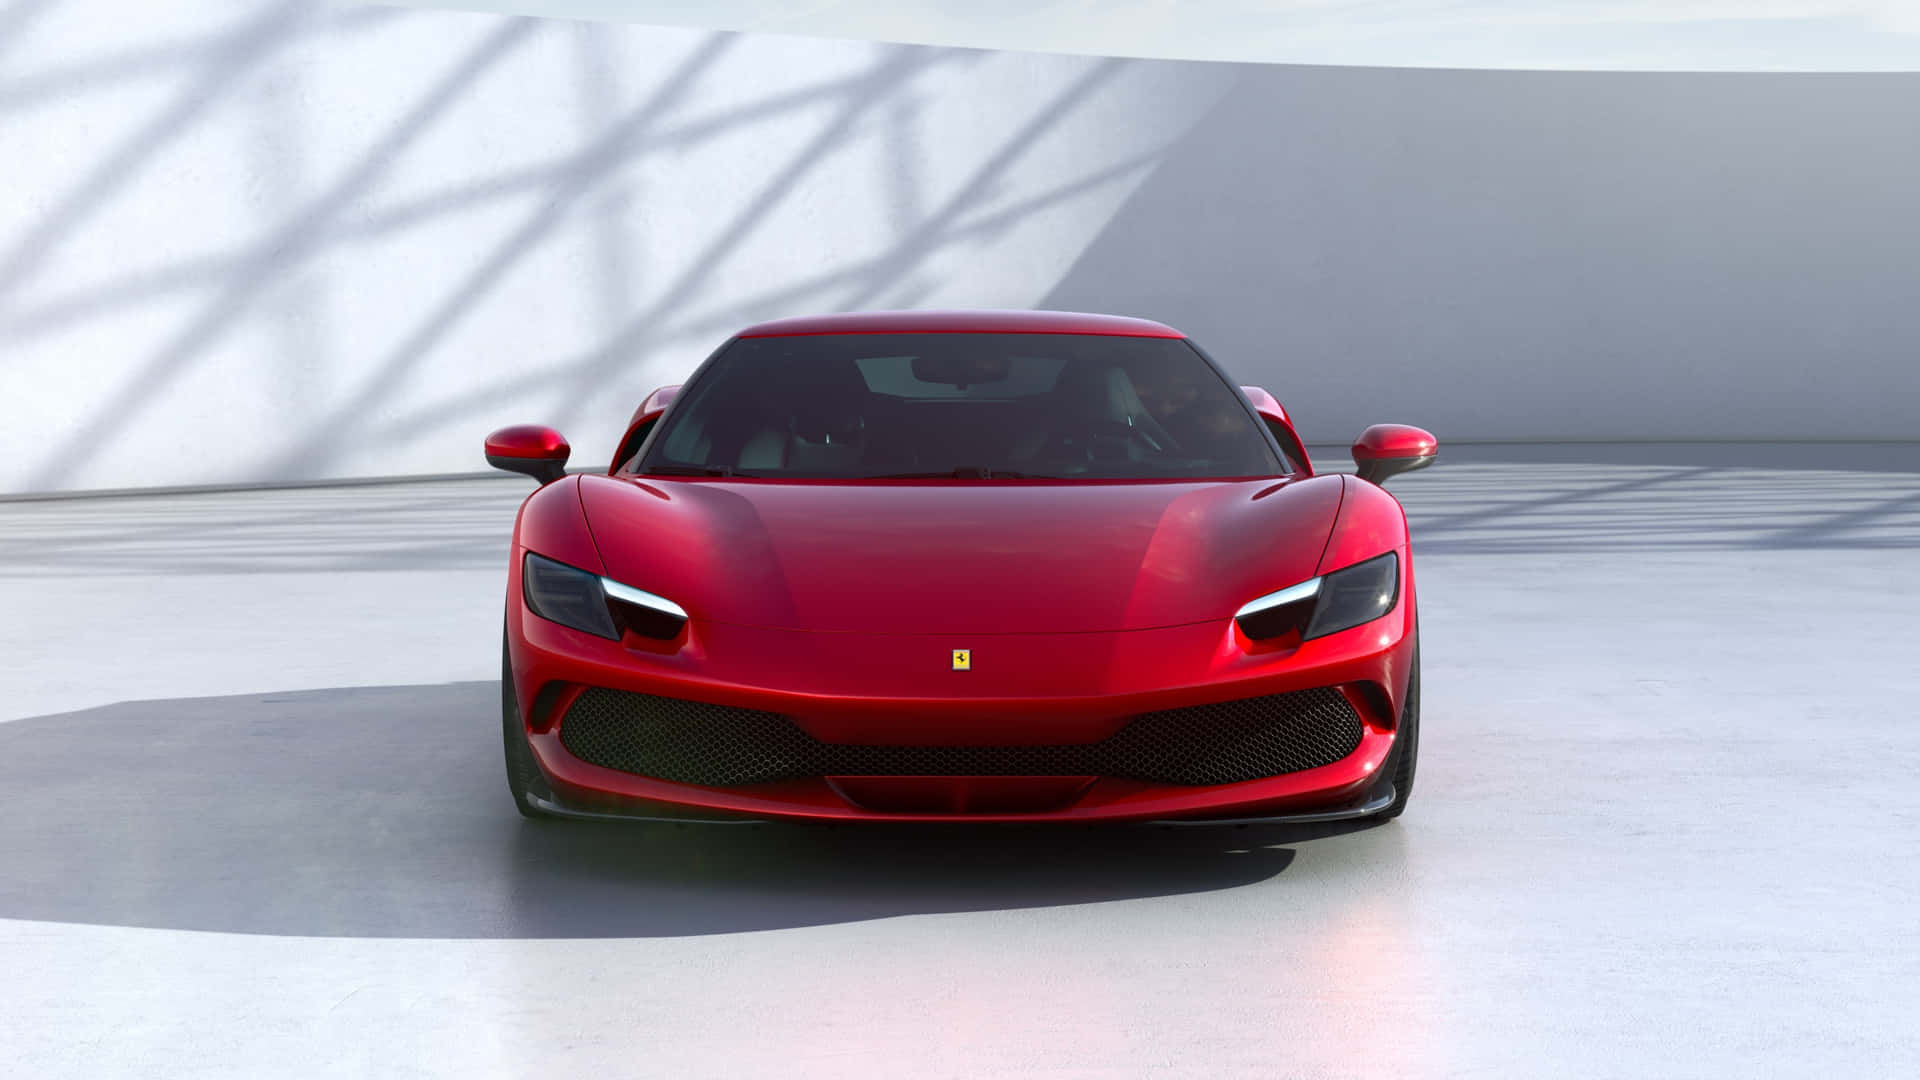 Genießedie Fahrt - Coole Ferrari-autos Wallpaper